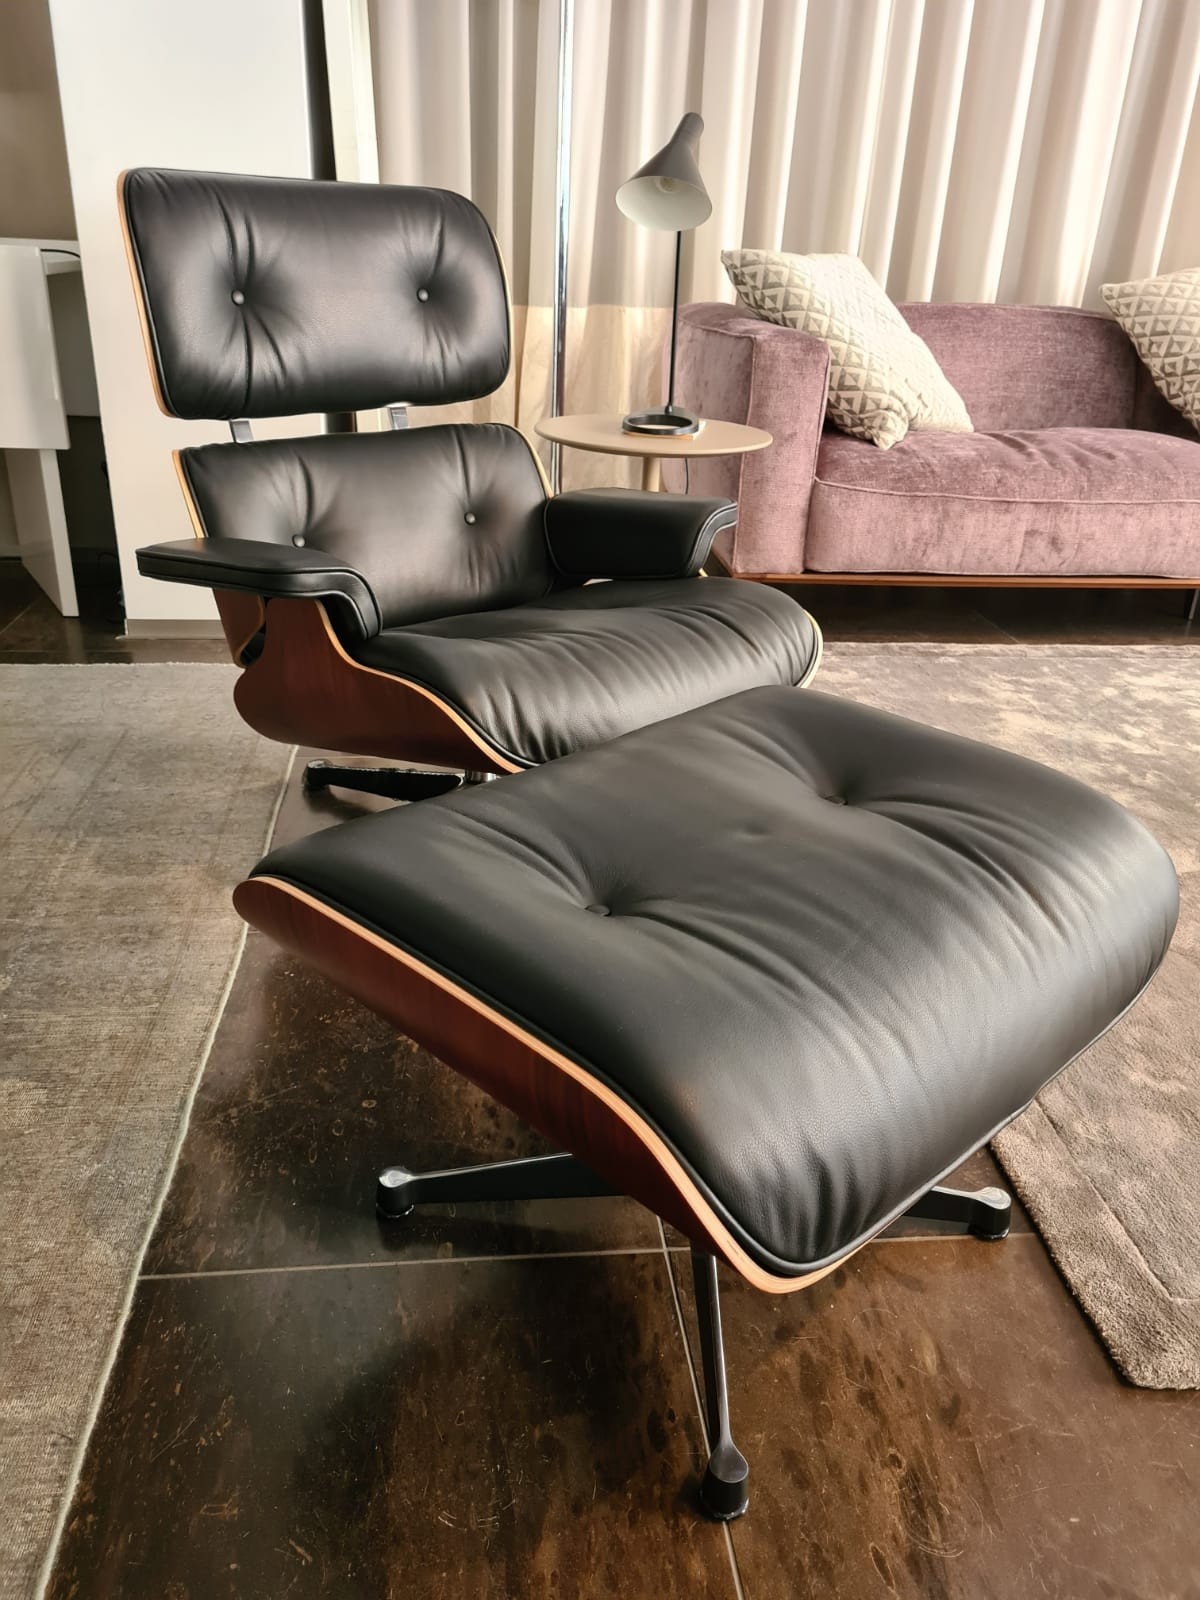 neef Haarzelf Oppervlakkig Vitra Eames Lounge Chair Ottoman Santos Rosewood | Buy Online at Deplain.com